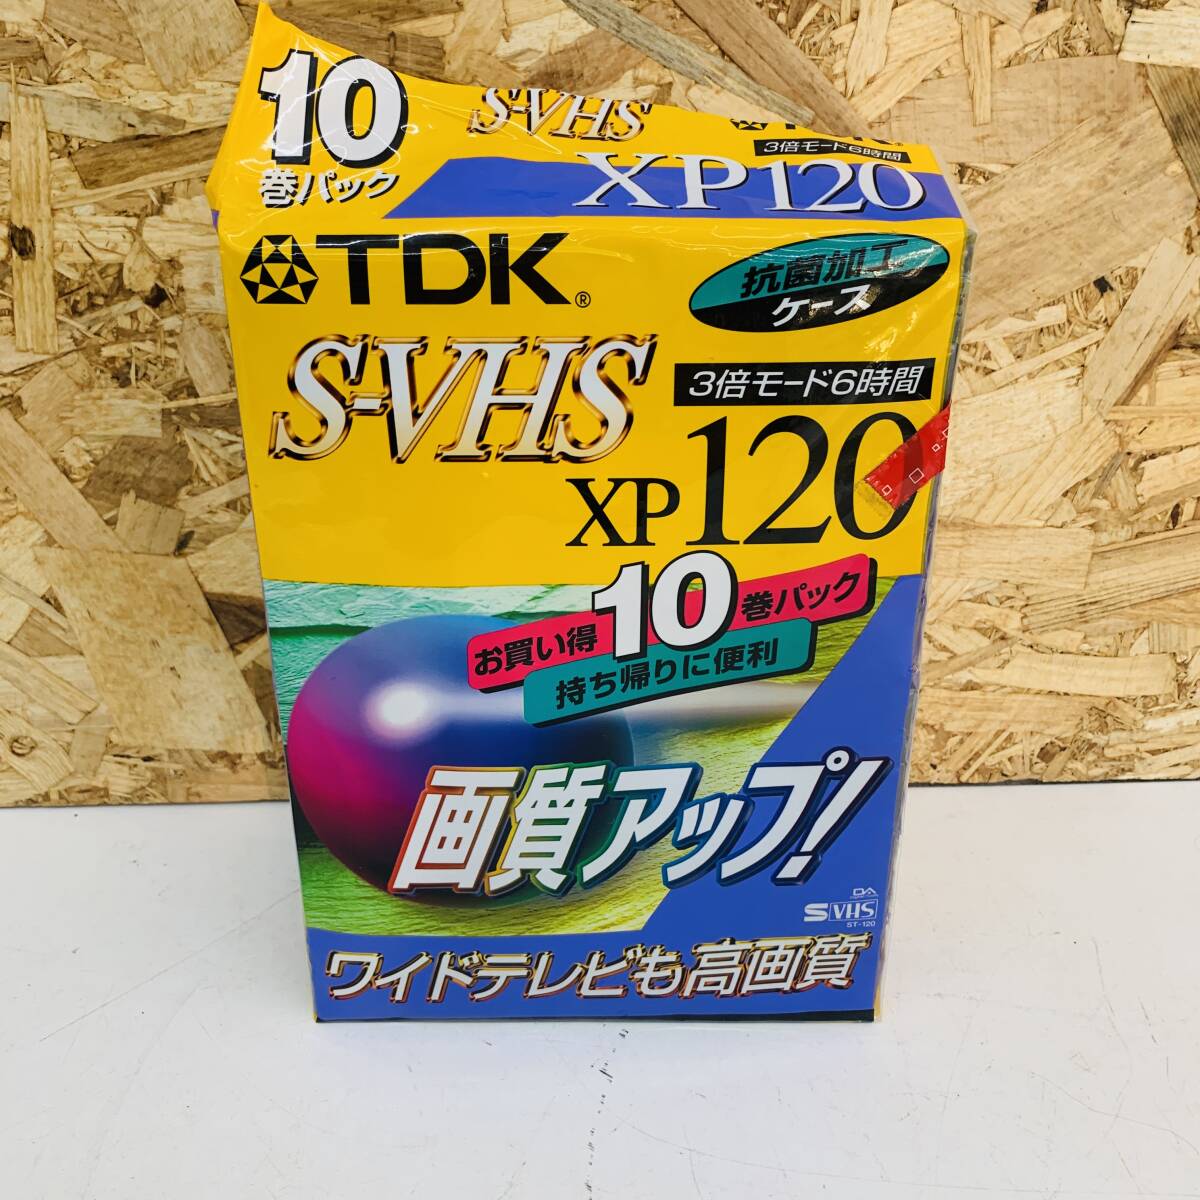  нераспечатанный товар TDK видеолента VHS S-VHS XP120 5PACK×2 комплект ST120XP *2400010363405